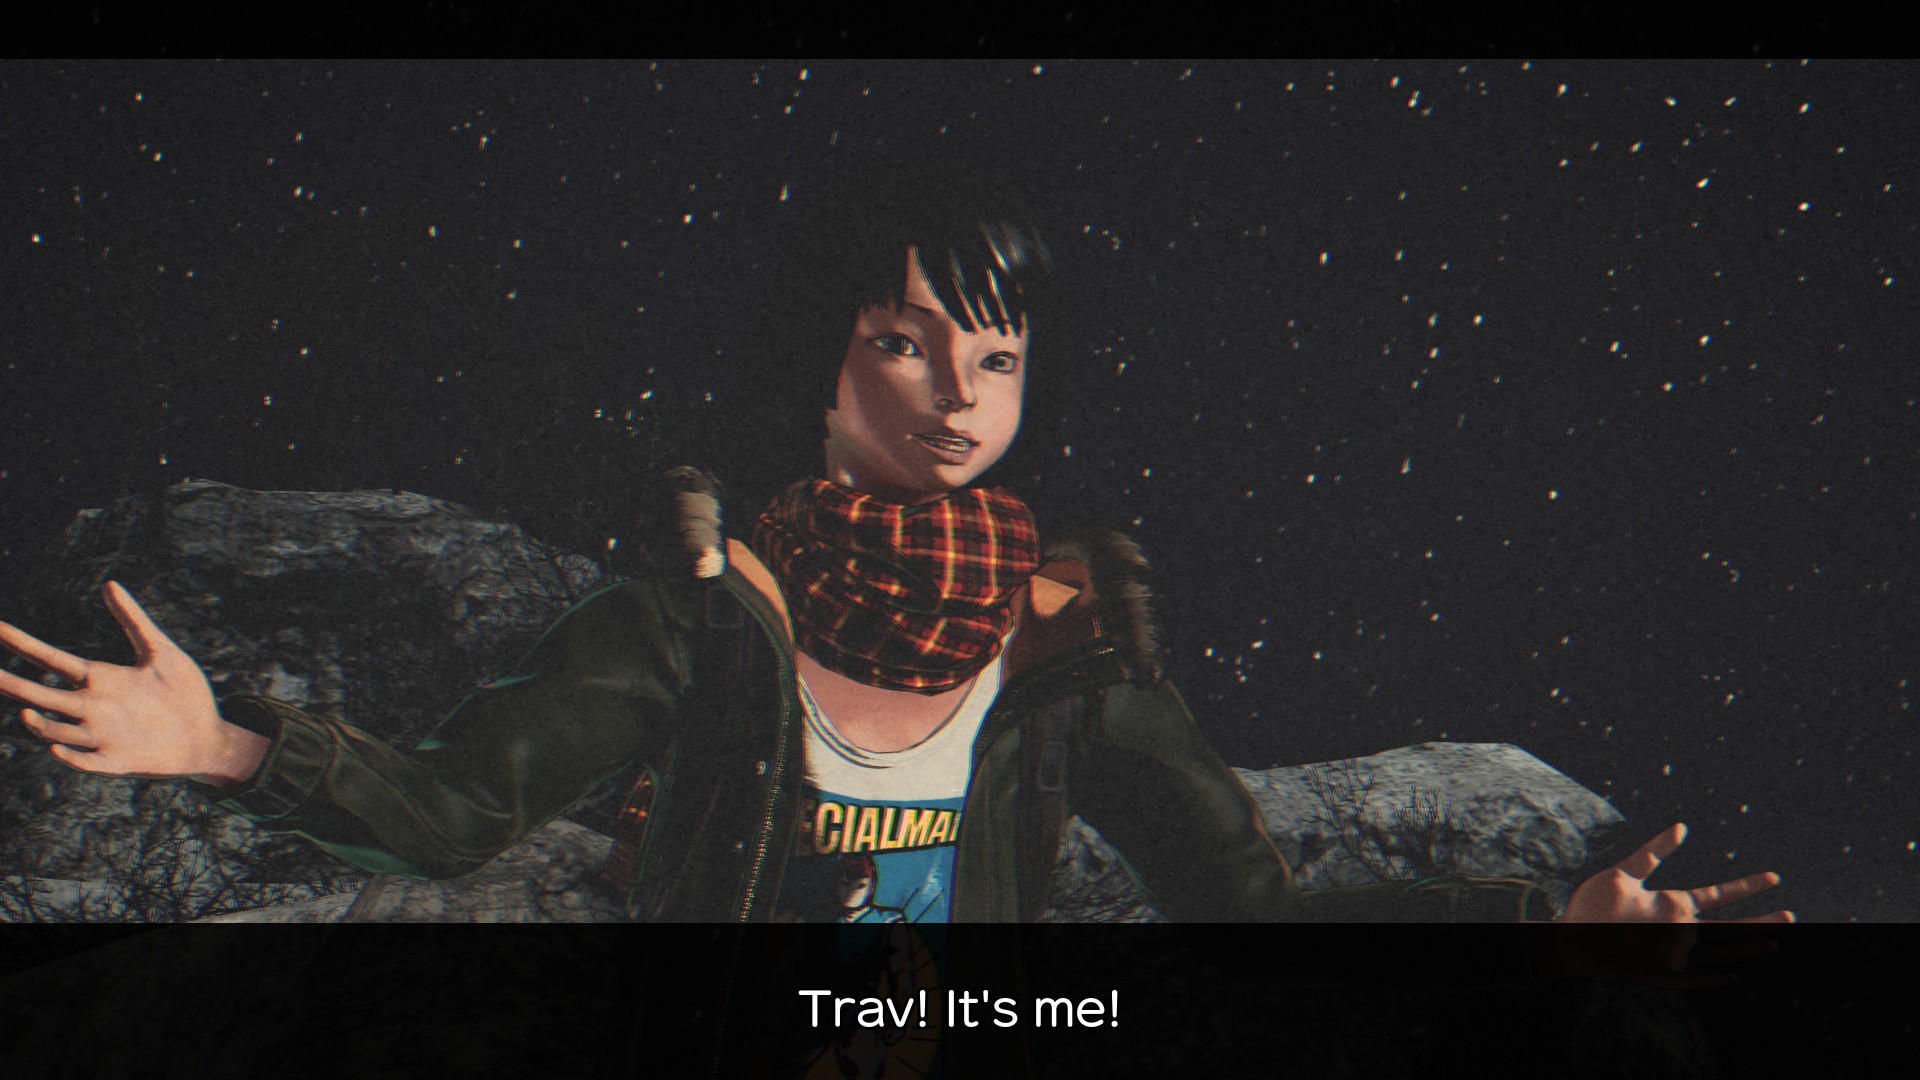 Screenshot from No More Heroes III. Newtype Kamui says, "Trav! It's me!"